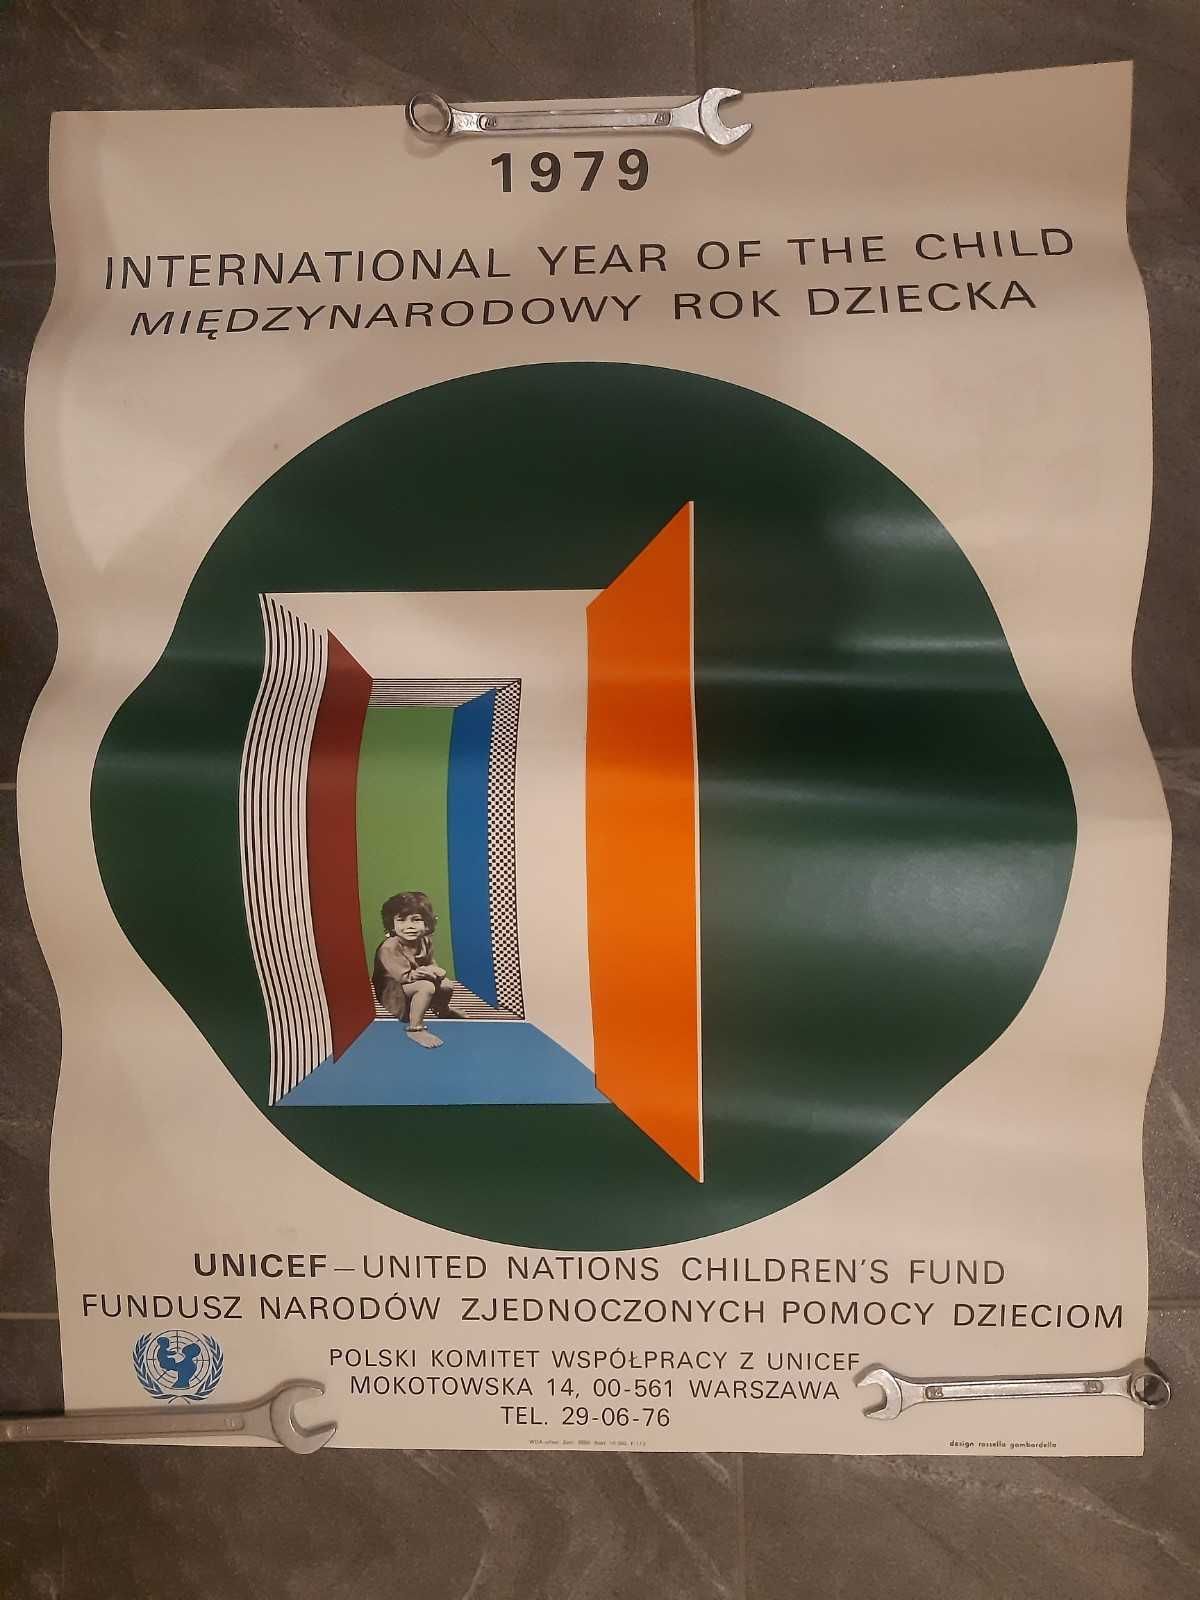 Unicef 79 International Year of the Child Rosella Gambardella Poster